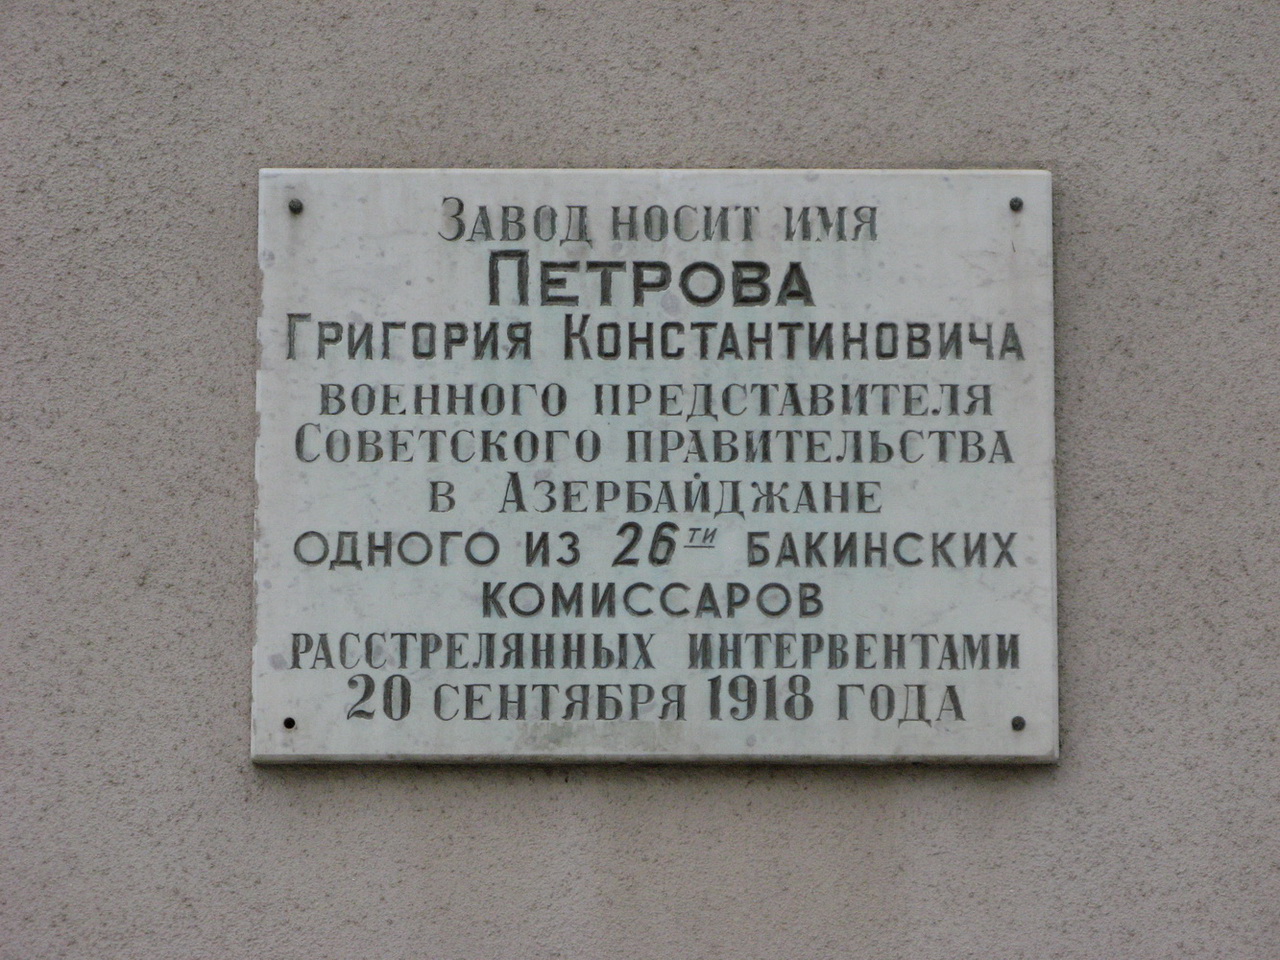 Volgograd, Электролесовская улица, 45 корп. 9. Volgograd — Memorial plaques